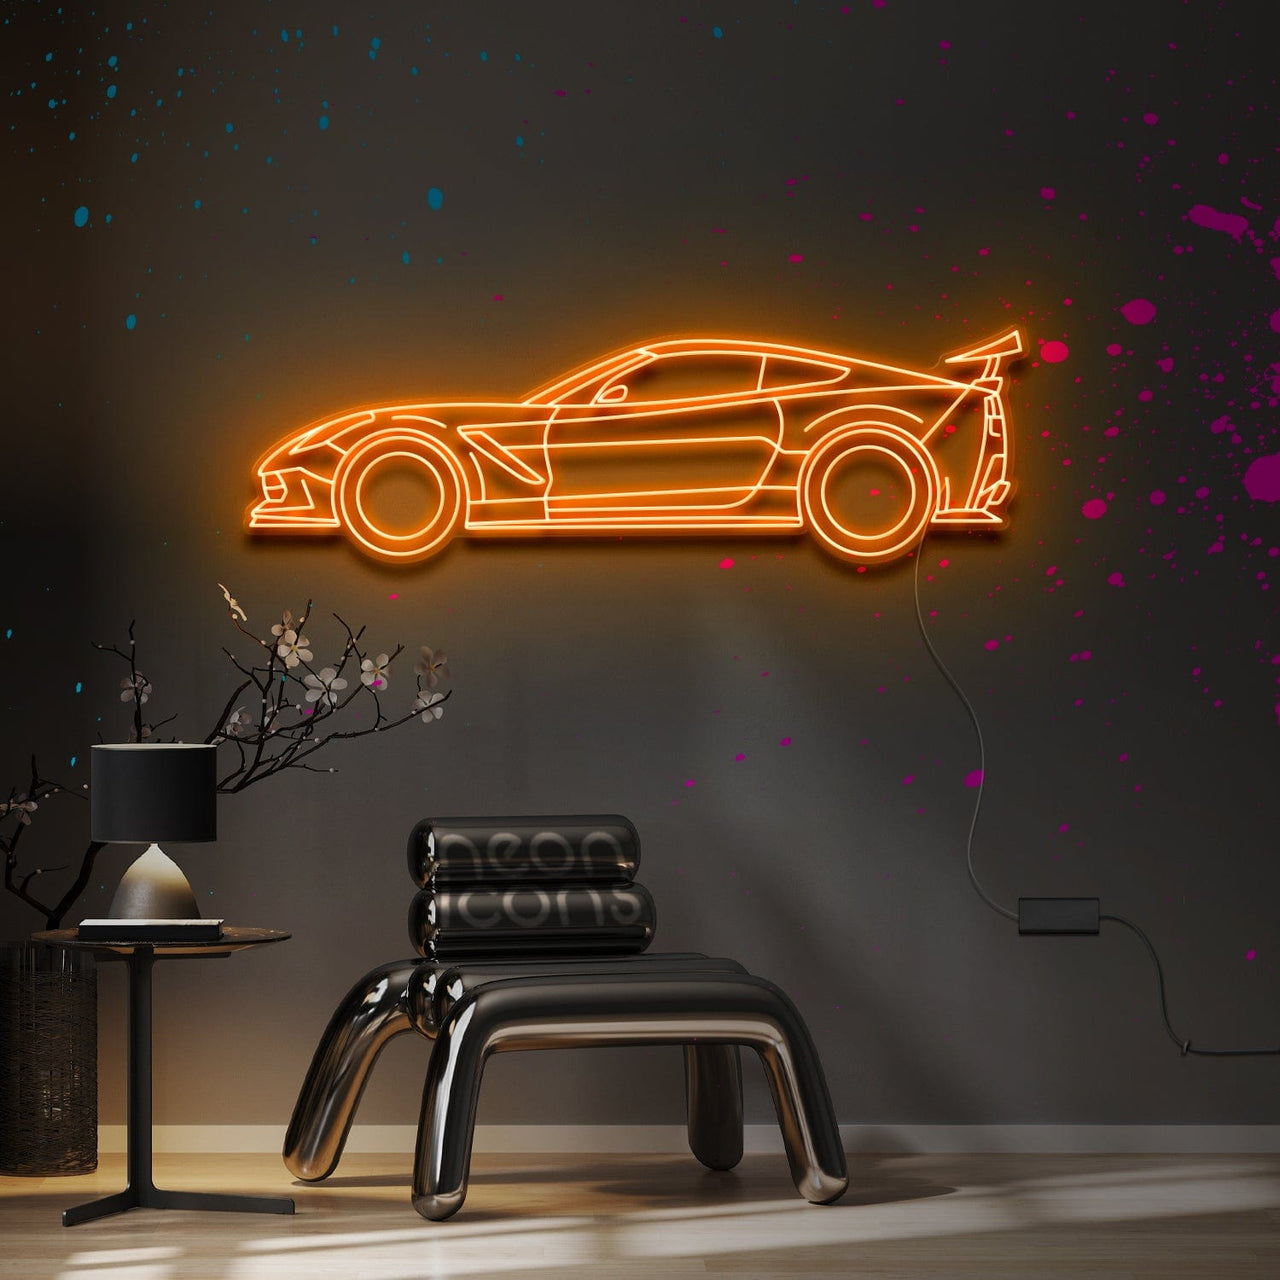 "Corvette C7 ZR1" Neon Sign 4ft x 1.3ft / Orange / LED Neon by Neon Icons